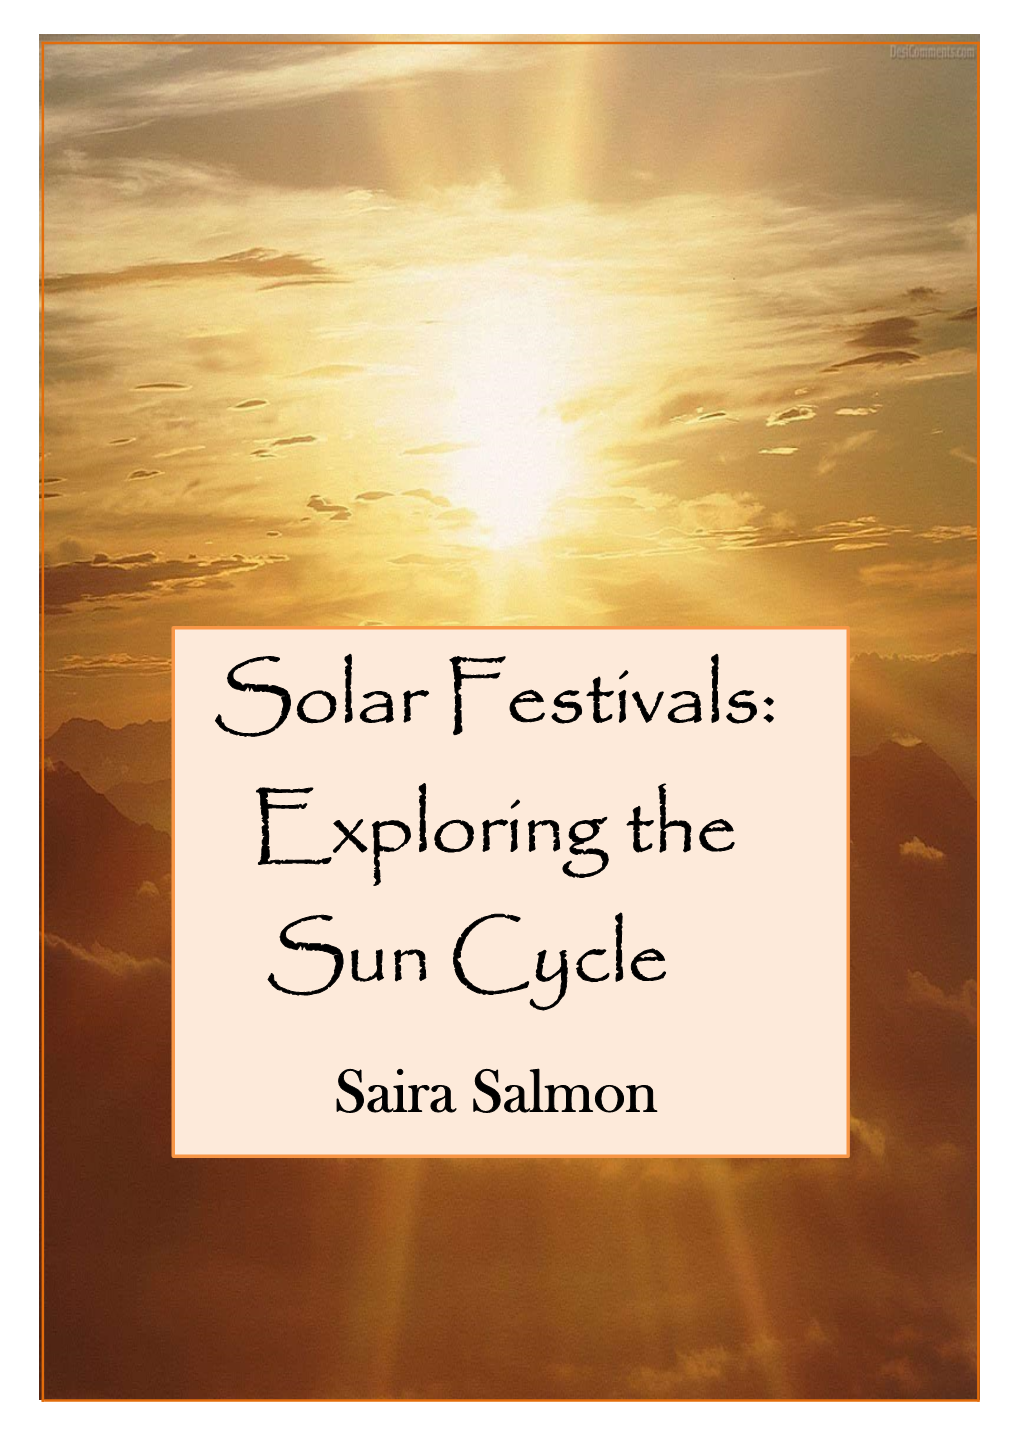 Solar Festivals: Exploring the Sun Cycle